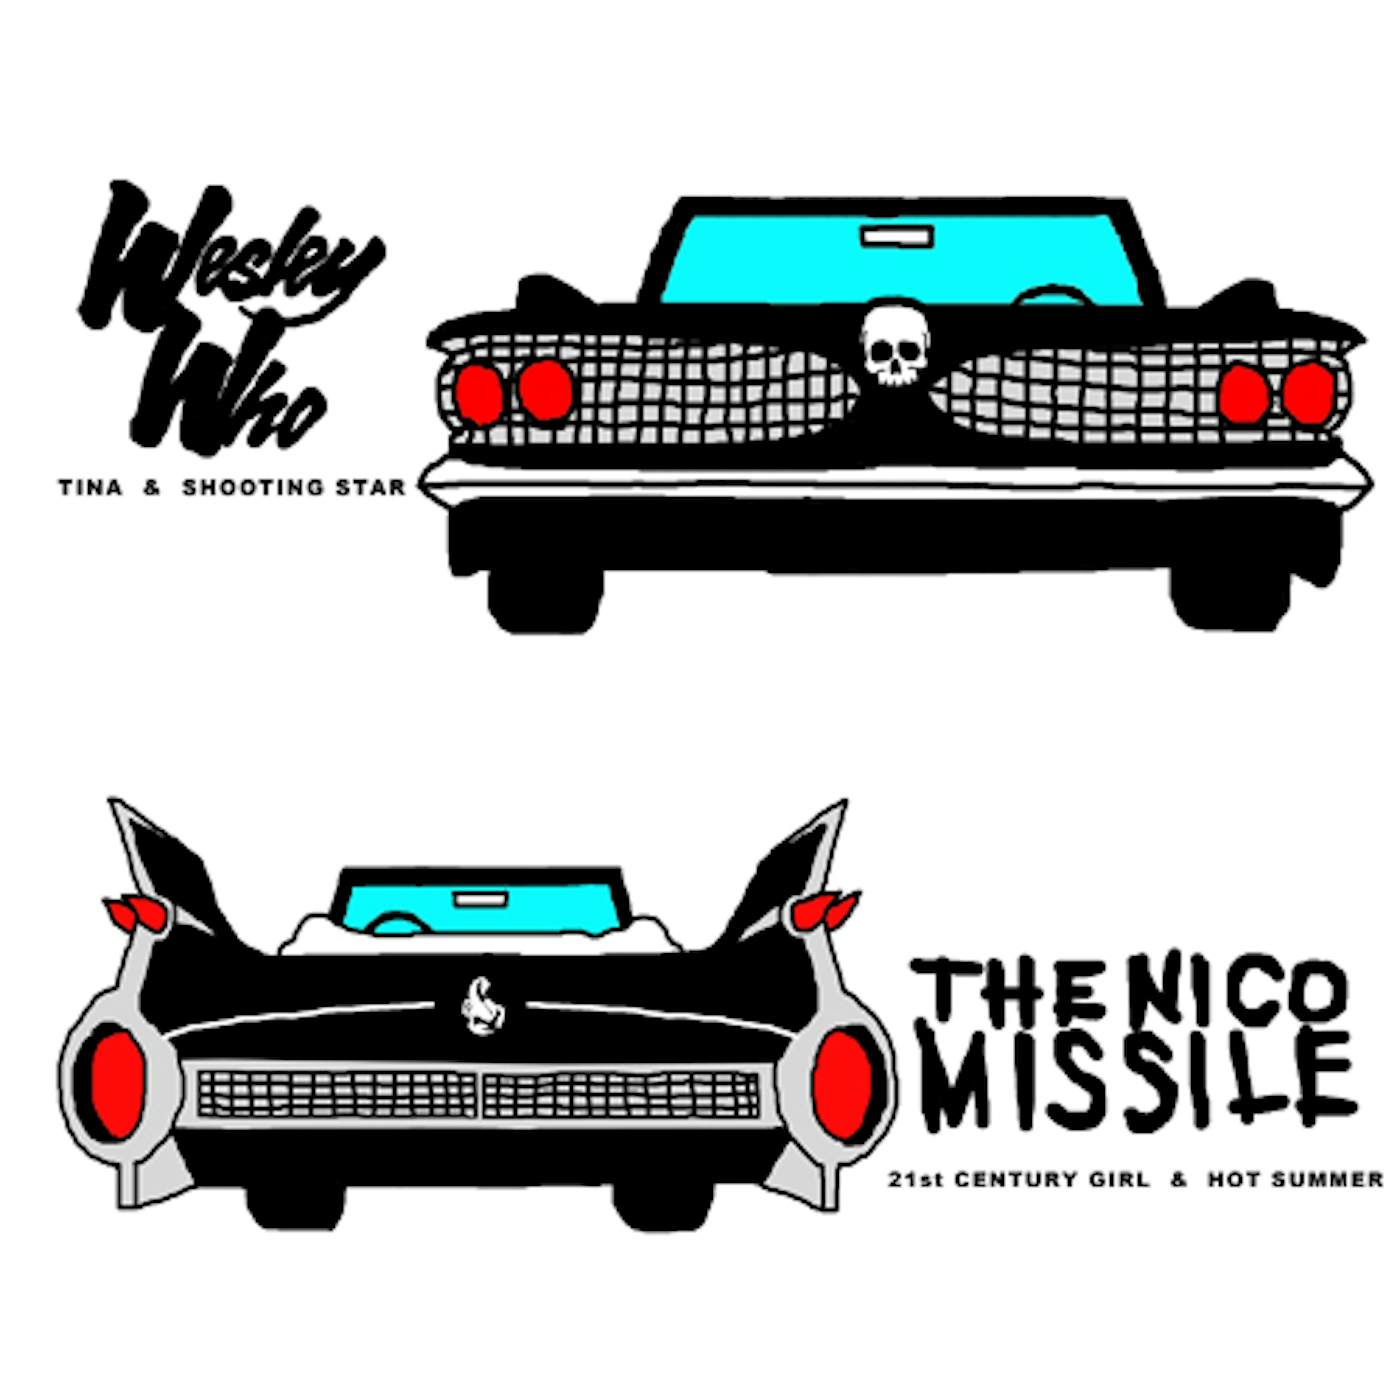 WESLEY WHO / NICO MISSILE SPLIT Vinyl Record - Colored Vinyl